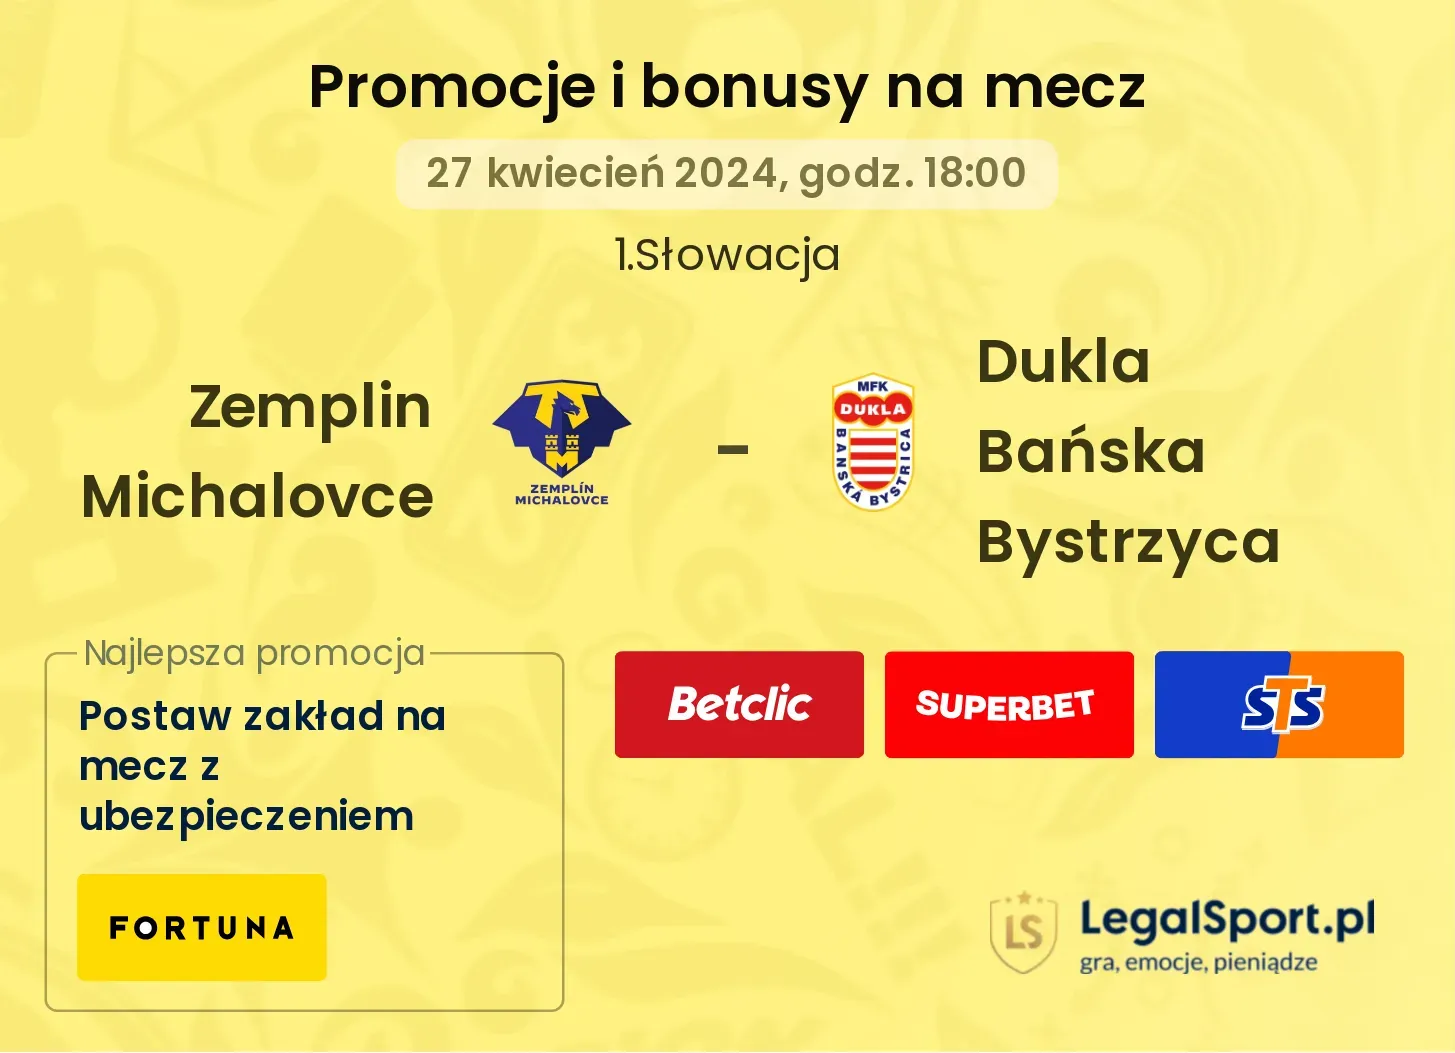 Zemplin Michalovce - Dukla Bańska Bystrzyca promocje bonusy na mecz